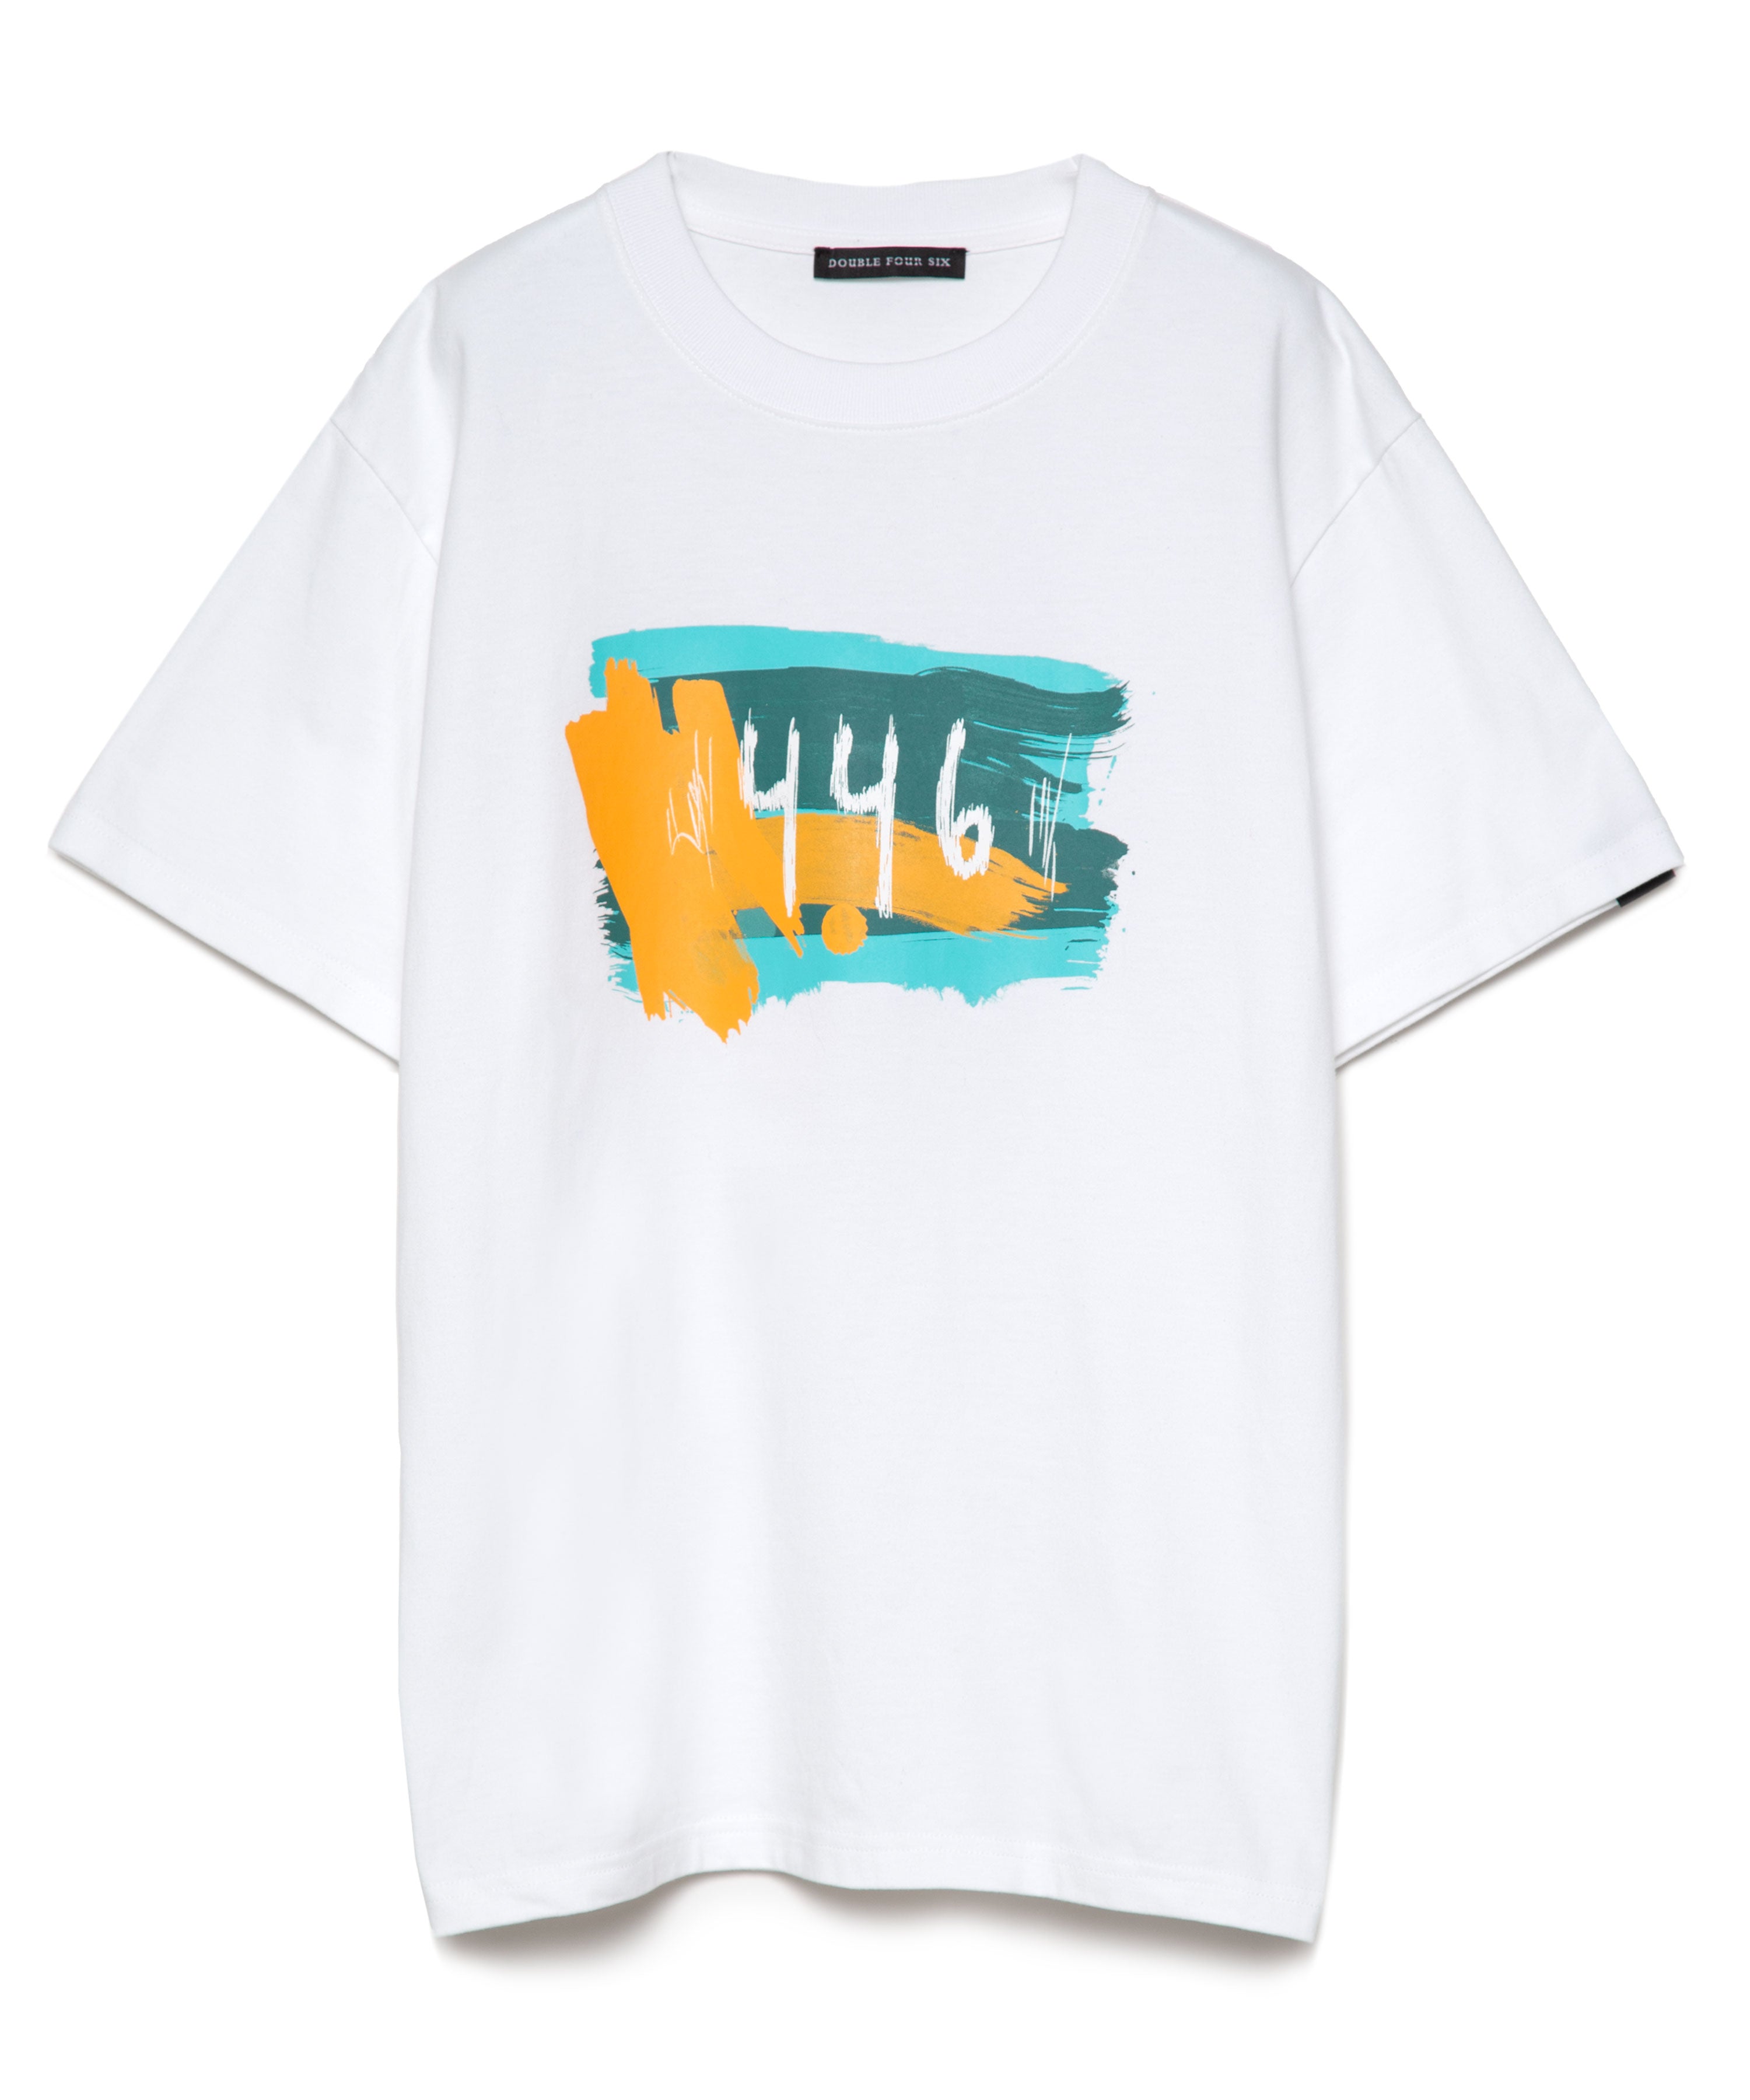 446- Brush Logo Print T-shirt White – 446 - DOUBLE FOUR SIX -